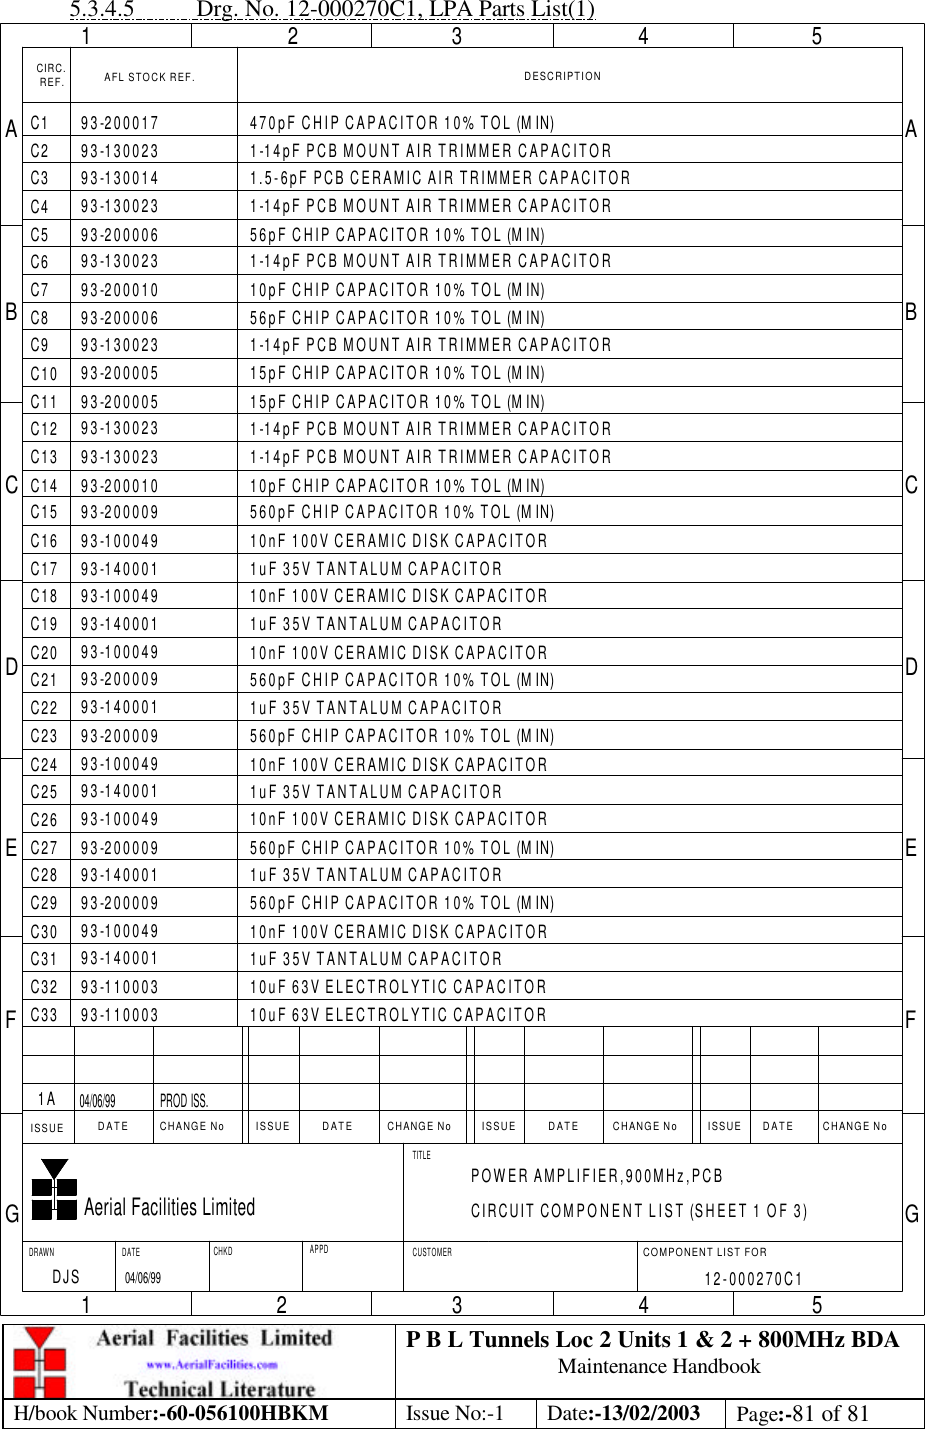 P B L Tunnels Loc 2 Units 1 &amp; 2 + 800MHz BDA Maintenance Handbook H/book Number:-60-056100HBKM Issue No:-1 Date:-13/02/2003 Page:-81 of 81  5.3.4.5 Drg. No. 12-000270C1, LPA Parts List(1) CIRC. DESCRIPTIONAFL STOCK REF.REF.CHANGE NoCHANGE NoCHANGE NoCHANGE No DATEDATEDATEDATE ISSUEISSUEISSUEISSUE1 2 3 4 554321ABCDEFGABCDEFGAerial Facilities LimitedDRAWN DATE APPDCHKD CUSTOMERTITLECOMPONENT LIST FORPOWER AMPLIFIER,900MHz,PCBCIRCUIT COMPONENT LIST (SHEET 1 OF 3)12-000270C11ADJS04/06/9904/06/99 PROD ISS.C2C4C5C393-200017C1 470pF CHIP CAPACITOR 10% TOL (MIN)C9C10C7C8C6C20C18C19C17C16C14C15C12C13C11C21C23C24C221-14pF PCB MOUNT AIR TRIMMER CAPACITOR93-1300231.5-6pF PCB CERAMIC AIR TRIMMER CAPACITOR93-1300141-14pF PCB MOUNT AIR TRIMMER CAPACITOR93-13002356pF CHIP CAPACITOR 10% TOL (MIN)93-2000061-14pF PCB MOUNT AIR TRIMMER CAPACITOR10pF CHIP CAPACITOR 10% TOL (MIN)93-20001056pF CHIP CAPACITOR 10% TOL (MIN)93-2000061-14pF PCB MOUNT AIR TRIMMER CAPACITOR15pF CHIP CAPACITOR 10% TOL (MIN)93-20000515pF CHIP CAPACITOR 10% TOL (MIN)93-2000051-14pF PCB MOUNT AIR TRIMMER CAPACITOR1-14pF PCB MOUNT AIR TRIMMER CAPACITOR93-200010 10pF CHIP CAPACITOR 10% TOL (MIN)93-200009 560pF CHIP CAPACITOR 10% TOL (MIN)10nF 100V CERAMIC DISK CAPACITOR93-1000491uF 35V TANTALUM CAPACITOR93-14000110nF 100V CERAMIC DISK CAPACITOR1uF 35V TANTALUM CAPACITOR10nF 100V CERAMIC DISK CAPACITOR560pF CHIP CAPACITOR 10% TOL (MIN)560pF CHIP CAPACITOR 10% TOL (MIN)1uF 35V TANTALUM CAPACITORC26C25C29C28C27C30C31C33C3210nF 100V CERAMIC DISK CAPACITOR1uF 35V TANTALUM CAPACITOR10nF 100V CERAMIC DISK CAPACITOR560pF CHIP CAPACITOR 10% TOL (MIN)1uF 35V TANTALUM CAPACITOR560pF CHIP CAPACITOR 10% TOL (MIN)10nF 100V CERAMIC DISK CAPACITOR1uF 35V TANTALUM CAPACITOR93-110003 10uF 63V ELECTROLYTIC CAPACITOR93-110003 10uF 63V ELECTROLYTIC CAPACITOR93-13002393-13002393-13002393-13002393-10004993-10004993-10004993-10004993-10004993-14000193-14000193-14000193-14000193-14000193-20000993-20000993-20000993-200009 